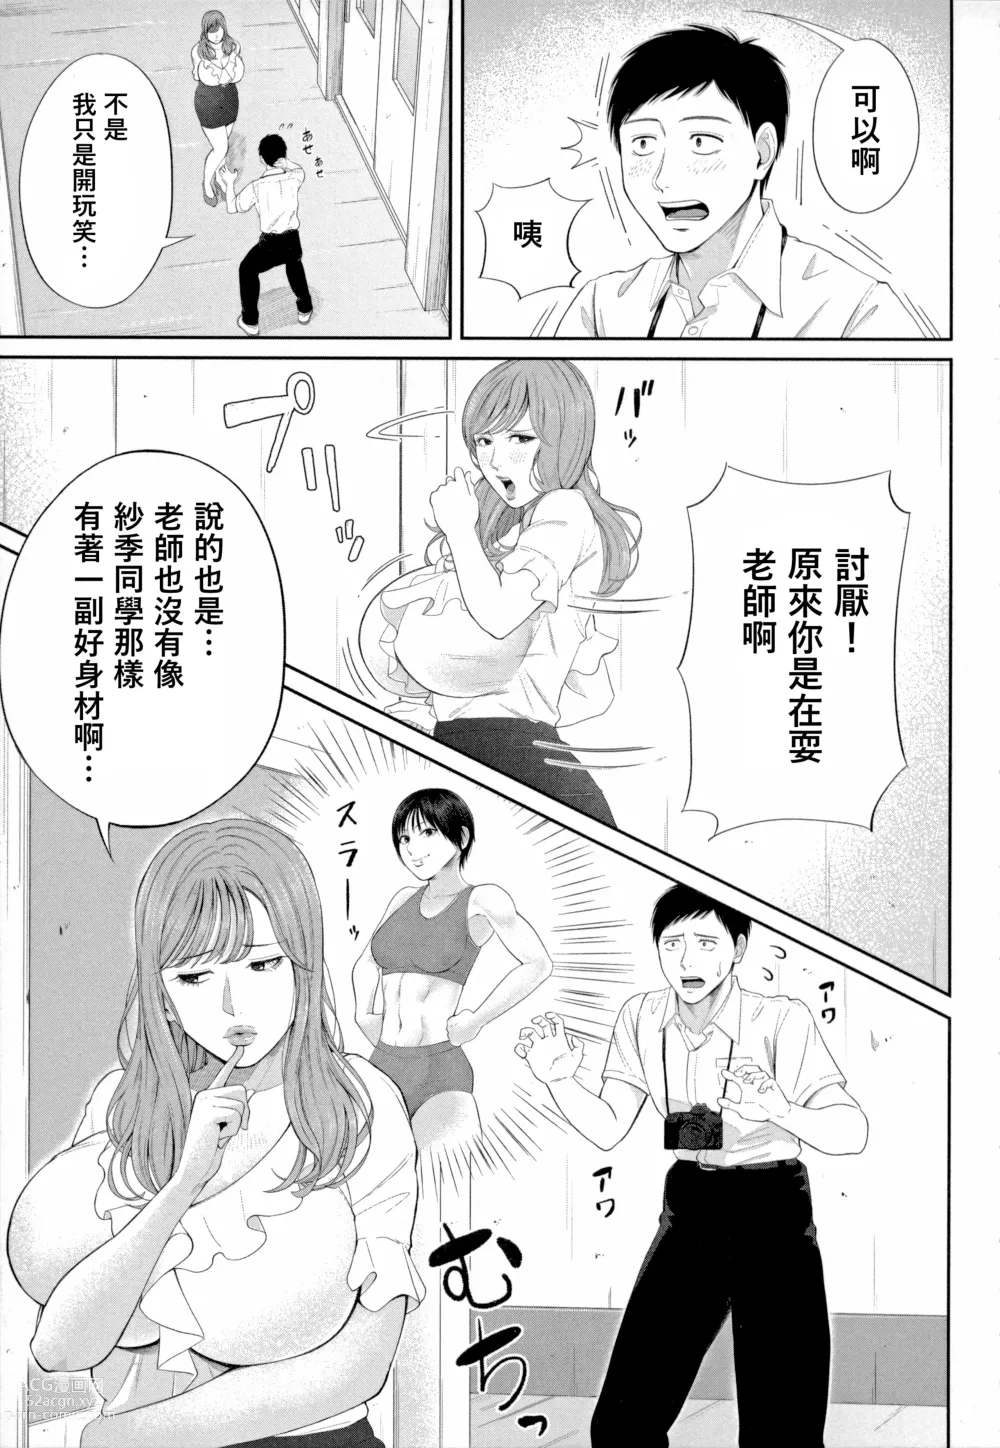 Page 7 of manga Senjou no Misshitsu